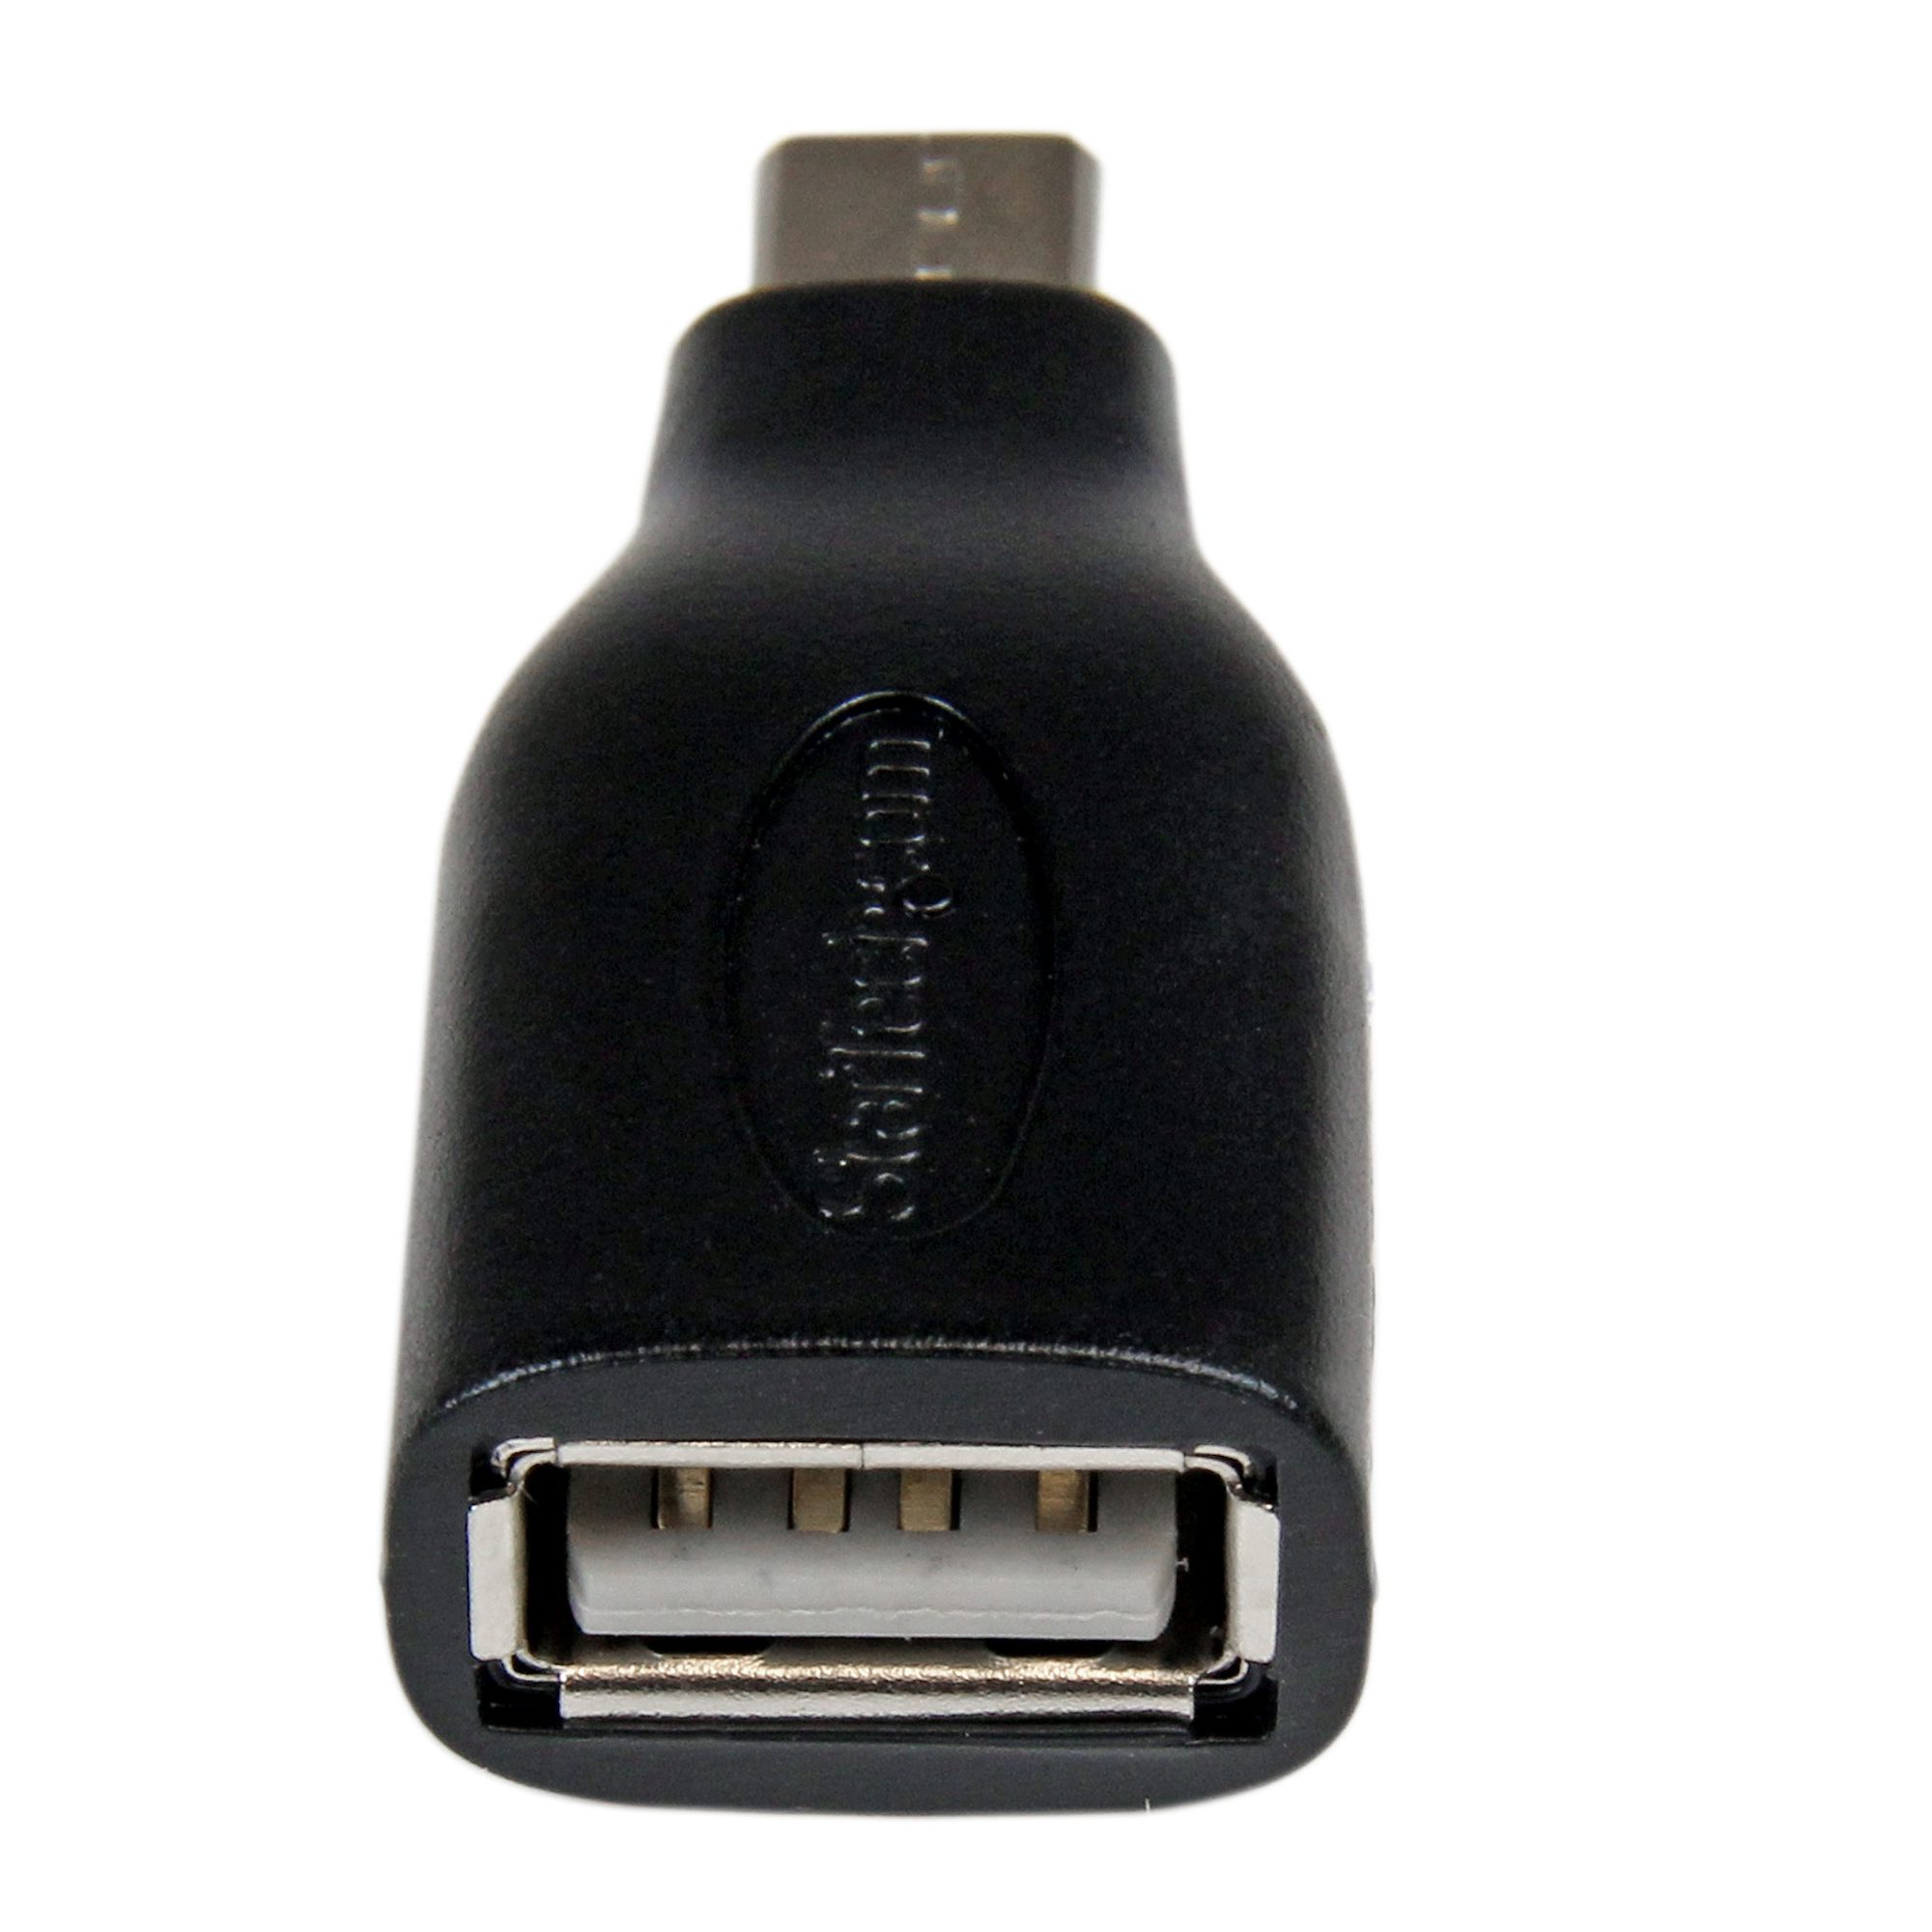 Micro USB OTG to USB Adapter - M/F - USB Adapters (USB 2.0), Cables